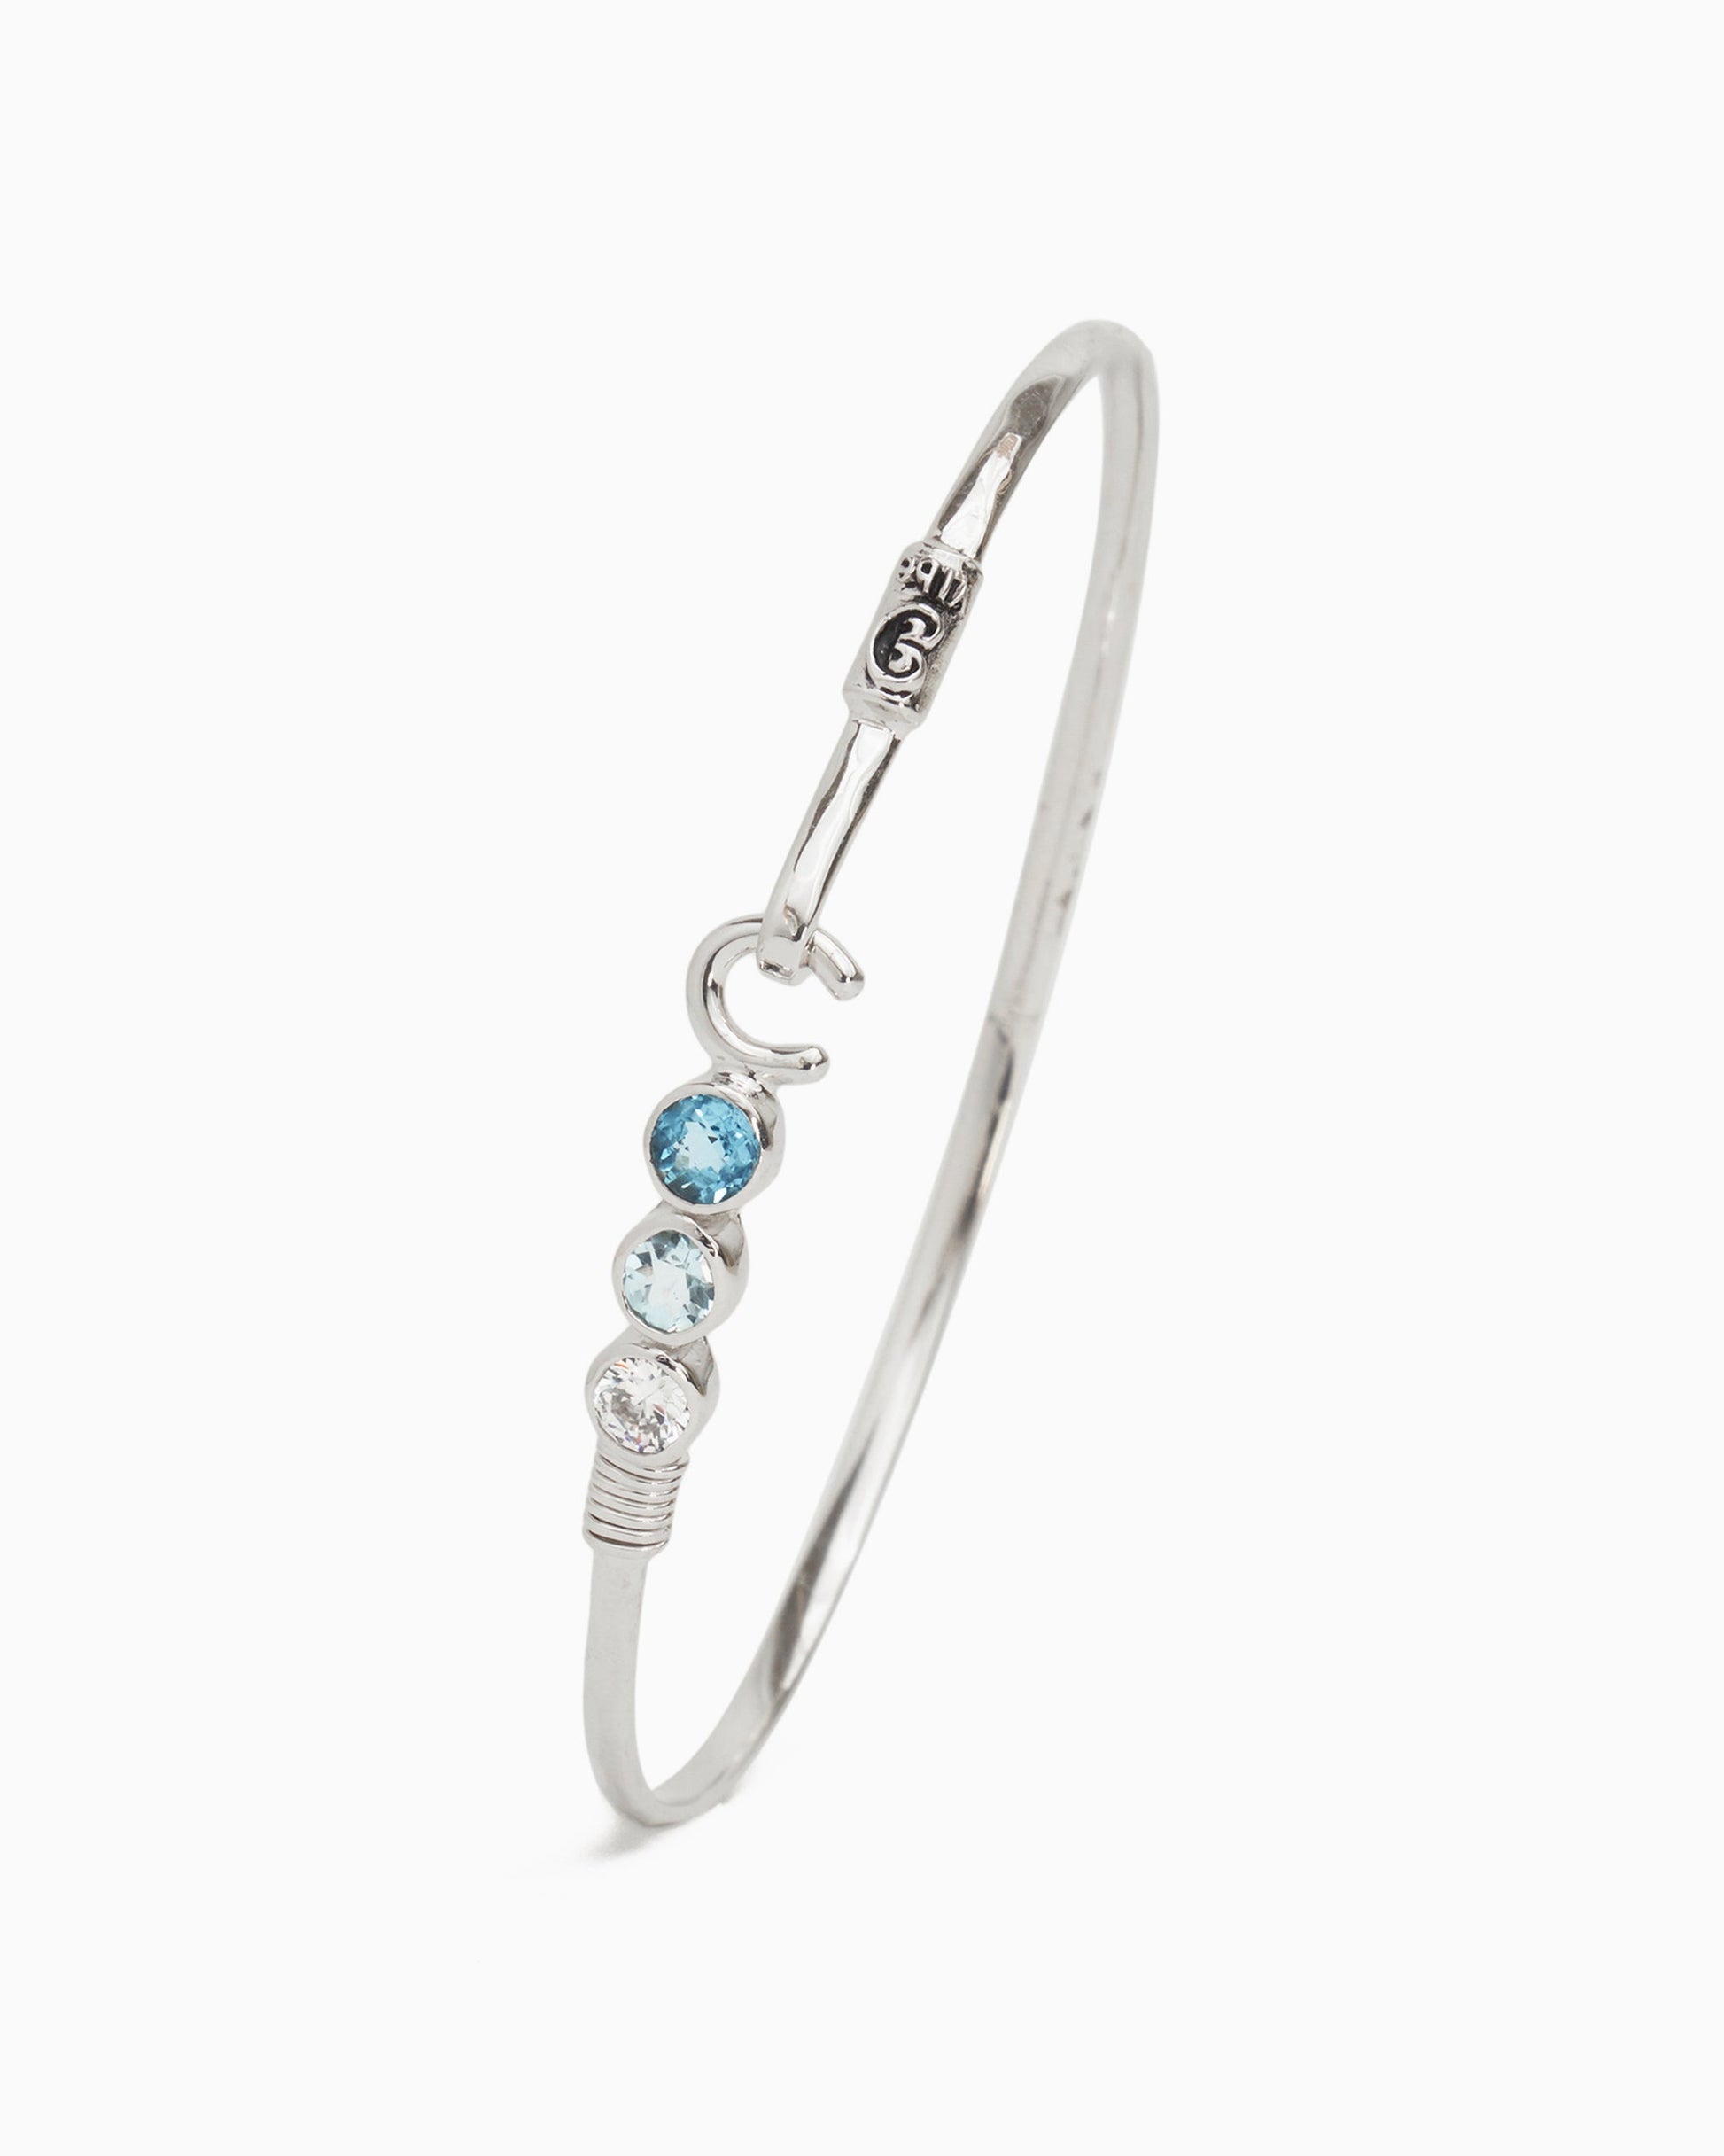 The Hook Bracelet with Triple Stones, 2mm - Hampton Blue Topaz/Blue Topaz/White Zircon Sterling Silver / XS (6.5)